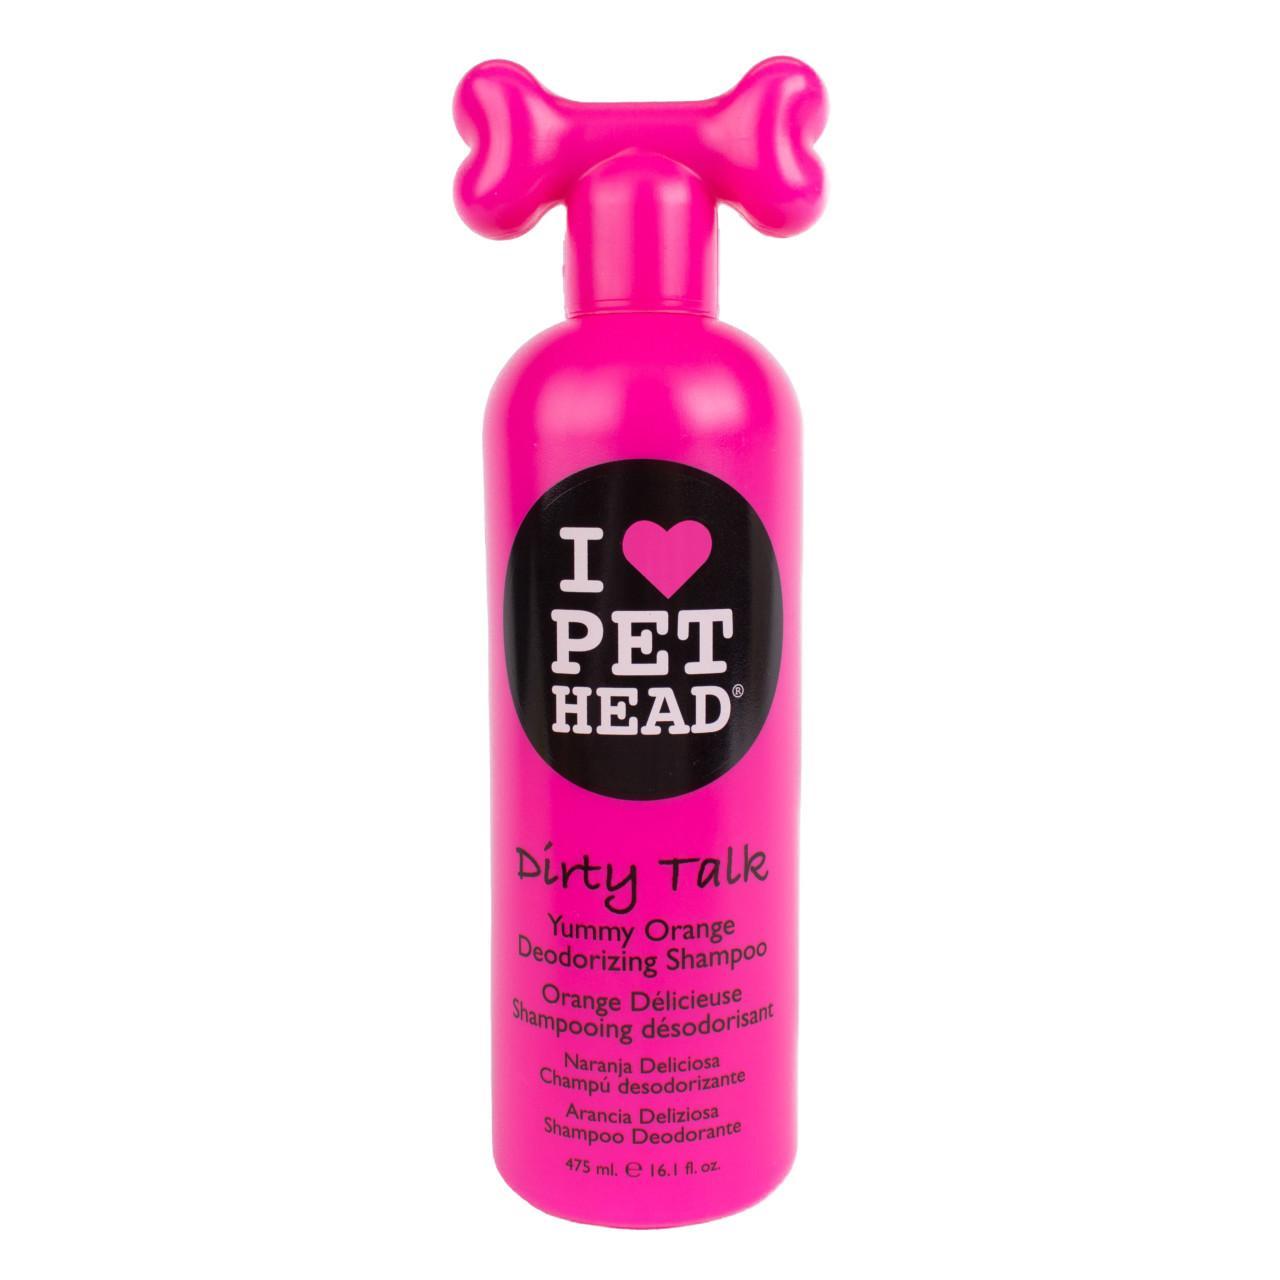 An image of Pet Head Dirty Talk Shampoo